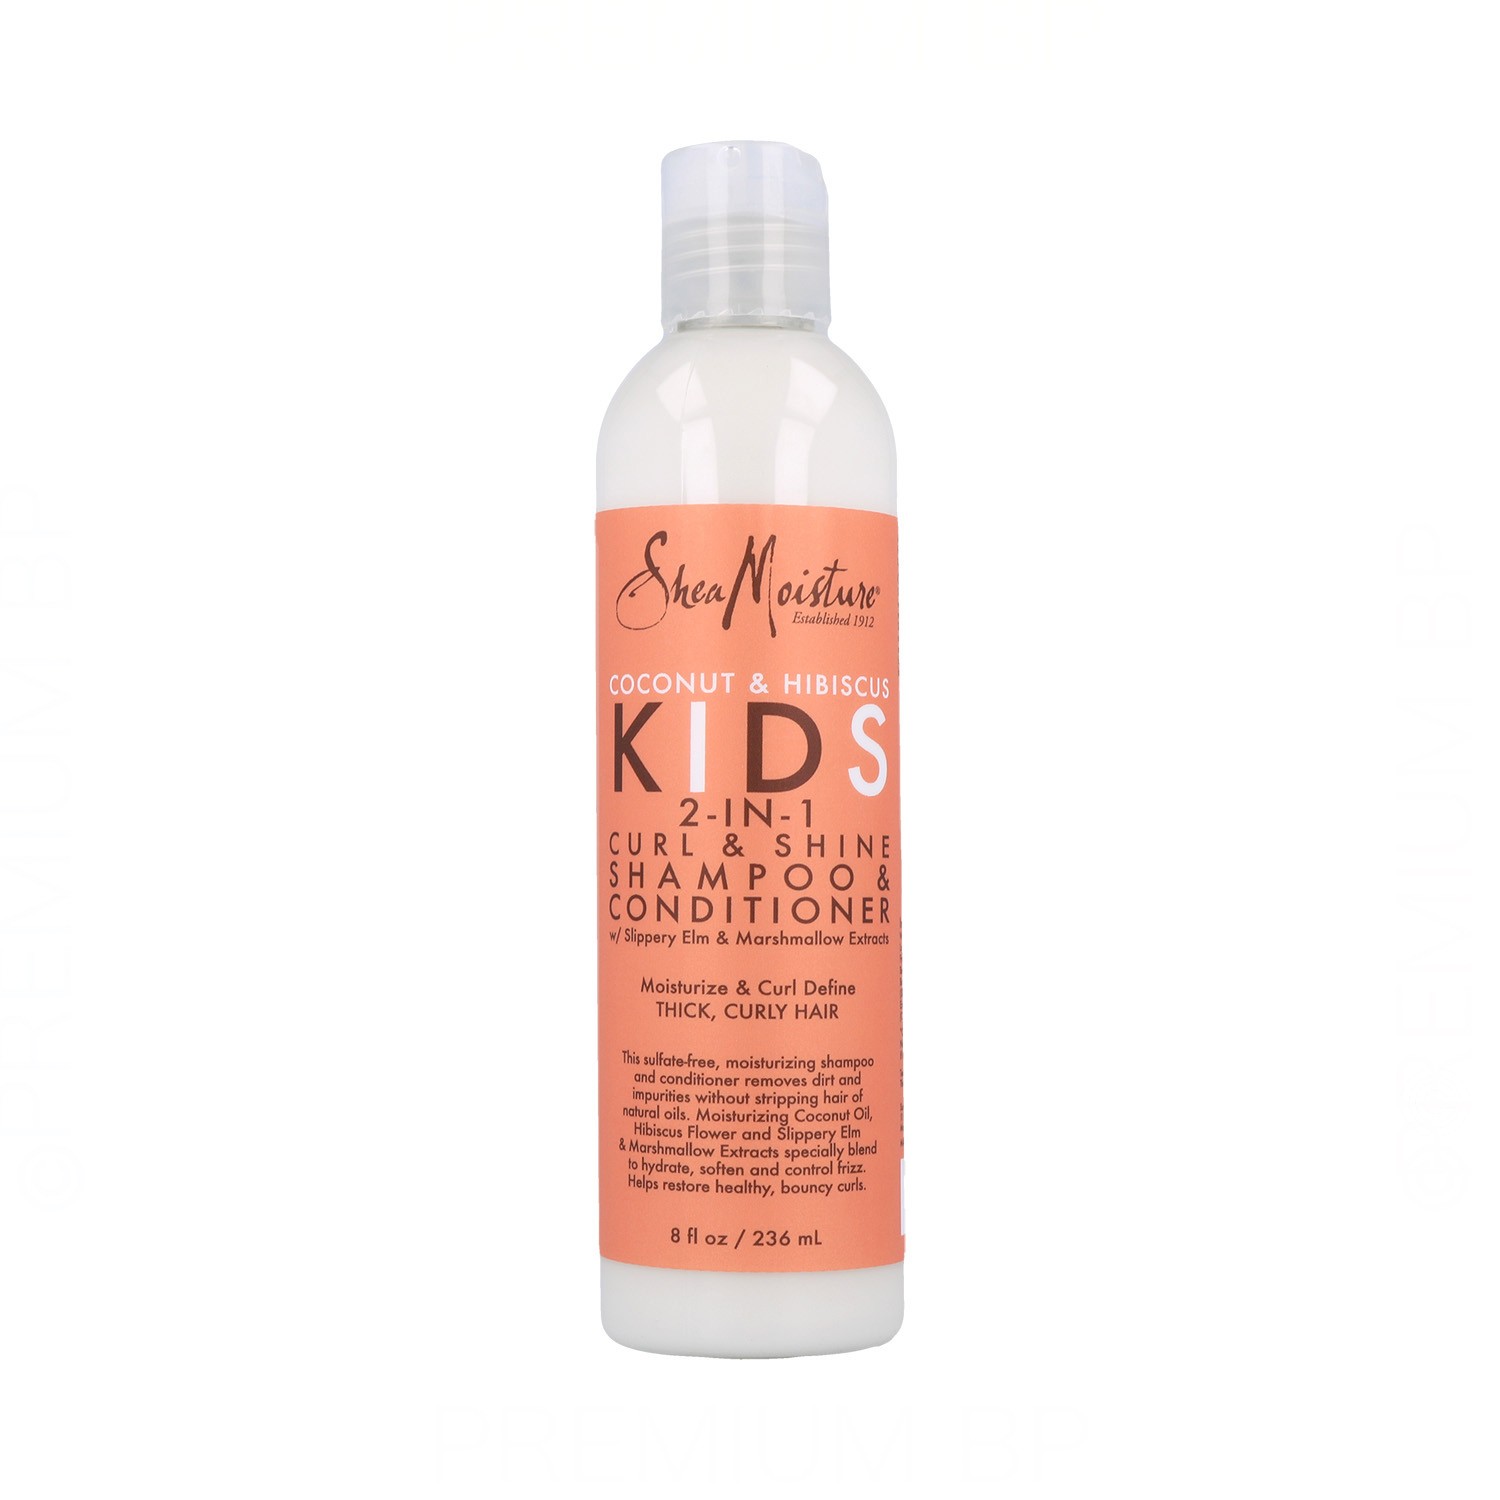 Shea Moisture Coconut & Hibiscus Kids 2-In-1 Xampú & Condicionador 8Oz/236 ml